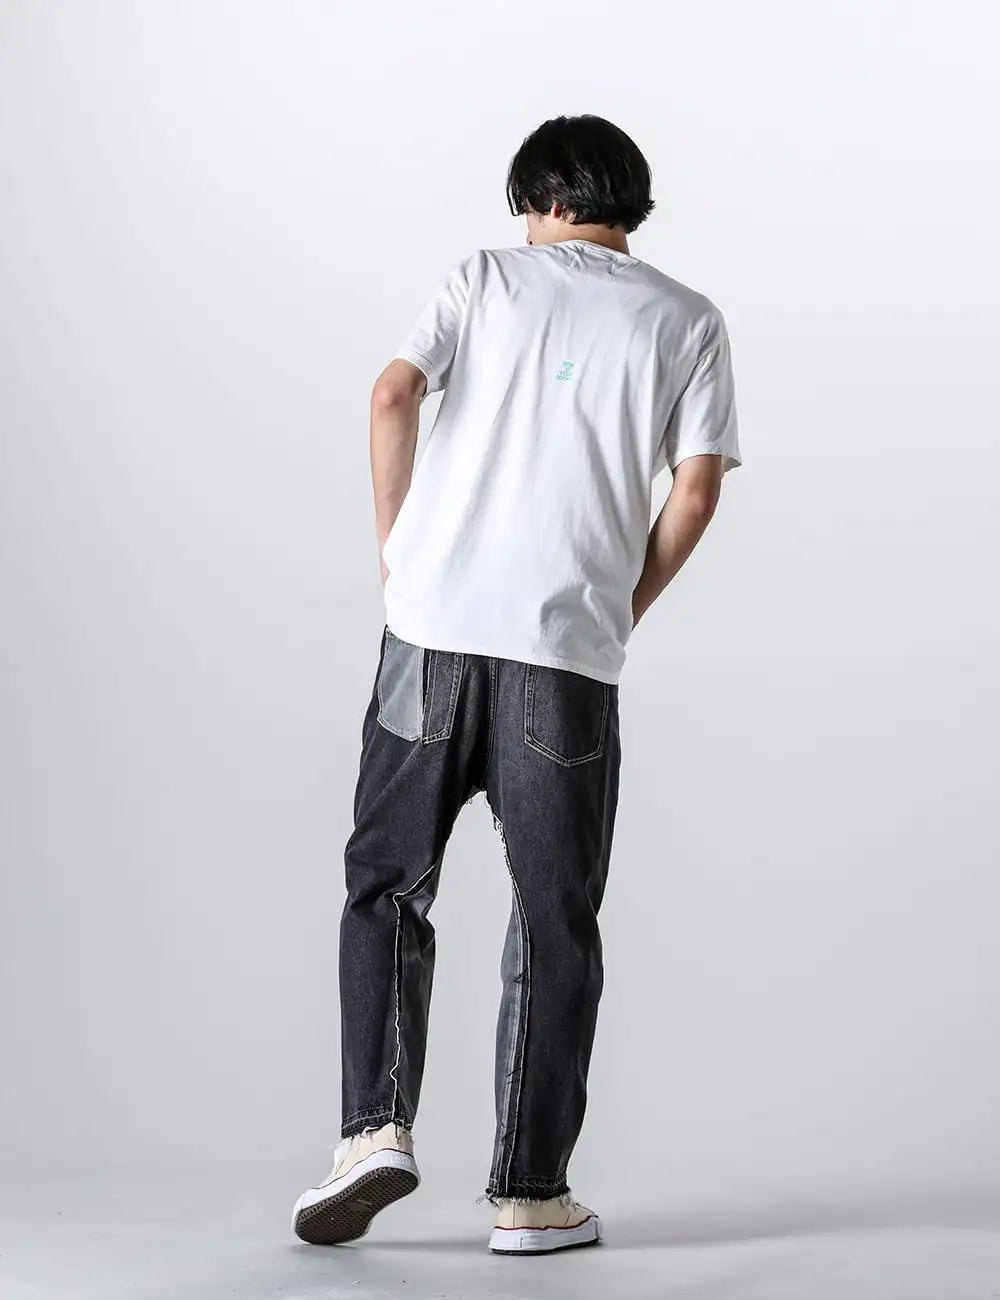 RAFU 24SS STYLING -Distinctive 3D silhouette - Rafu033-Band T-shirt A White - 16102-Black_CL-Twisted 3D sarouel denim black CL - A04FW729-Original sole canvas low-cut sneakers 4-003